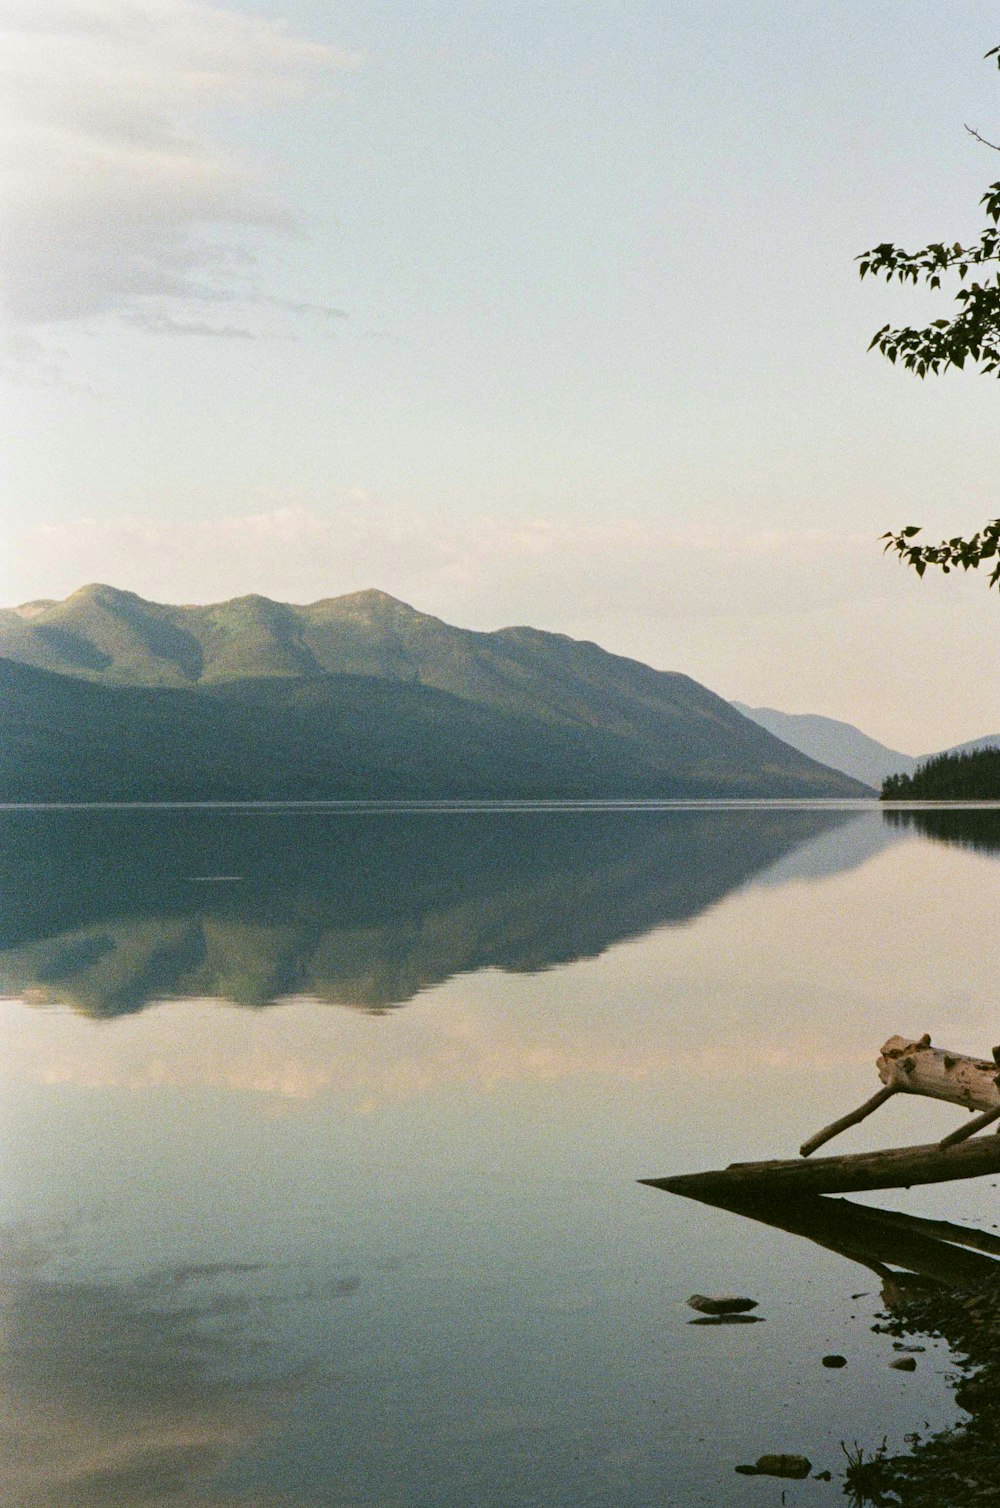 man sitting on brown wooden boat on lake during daytime